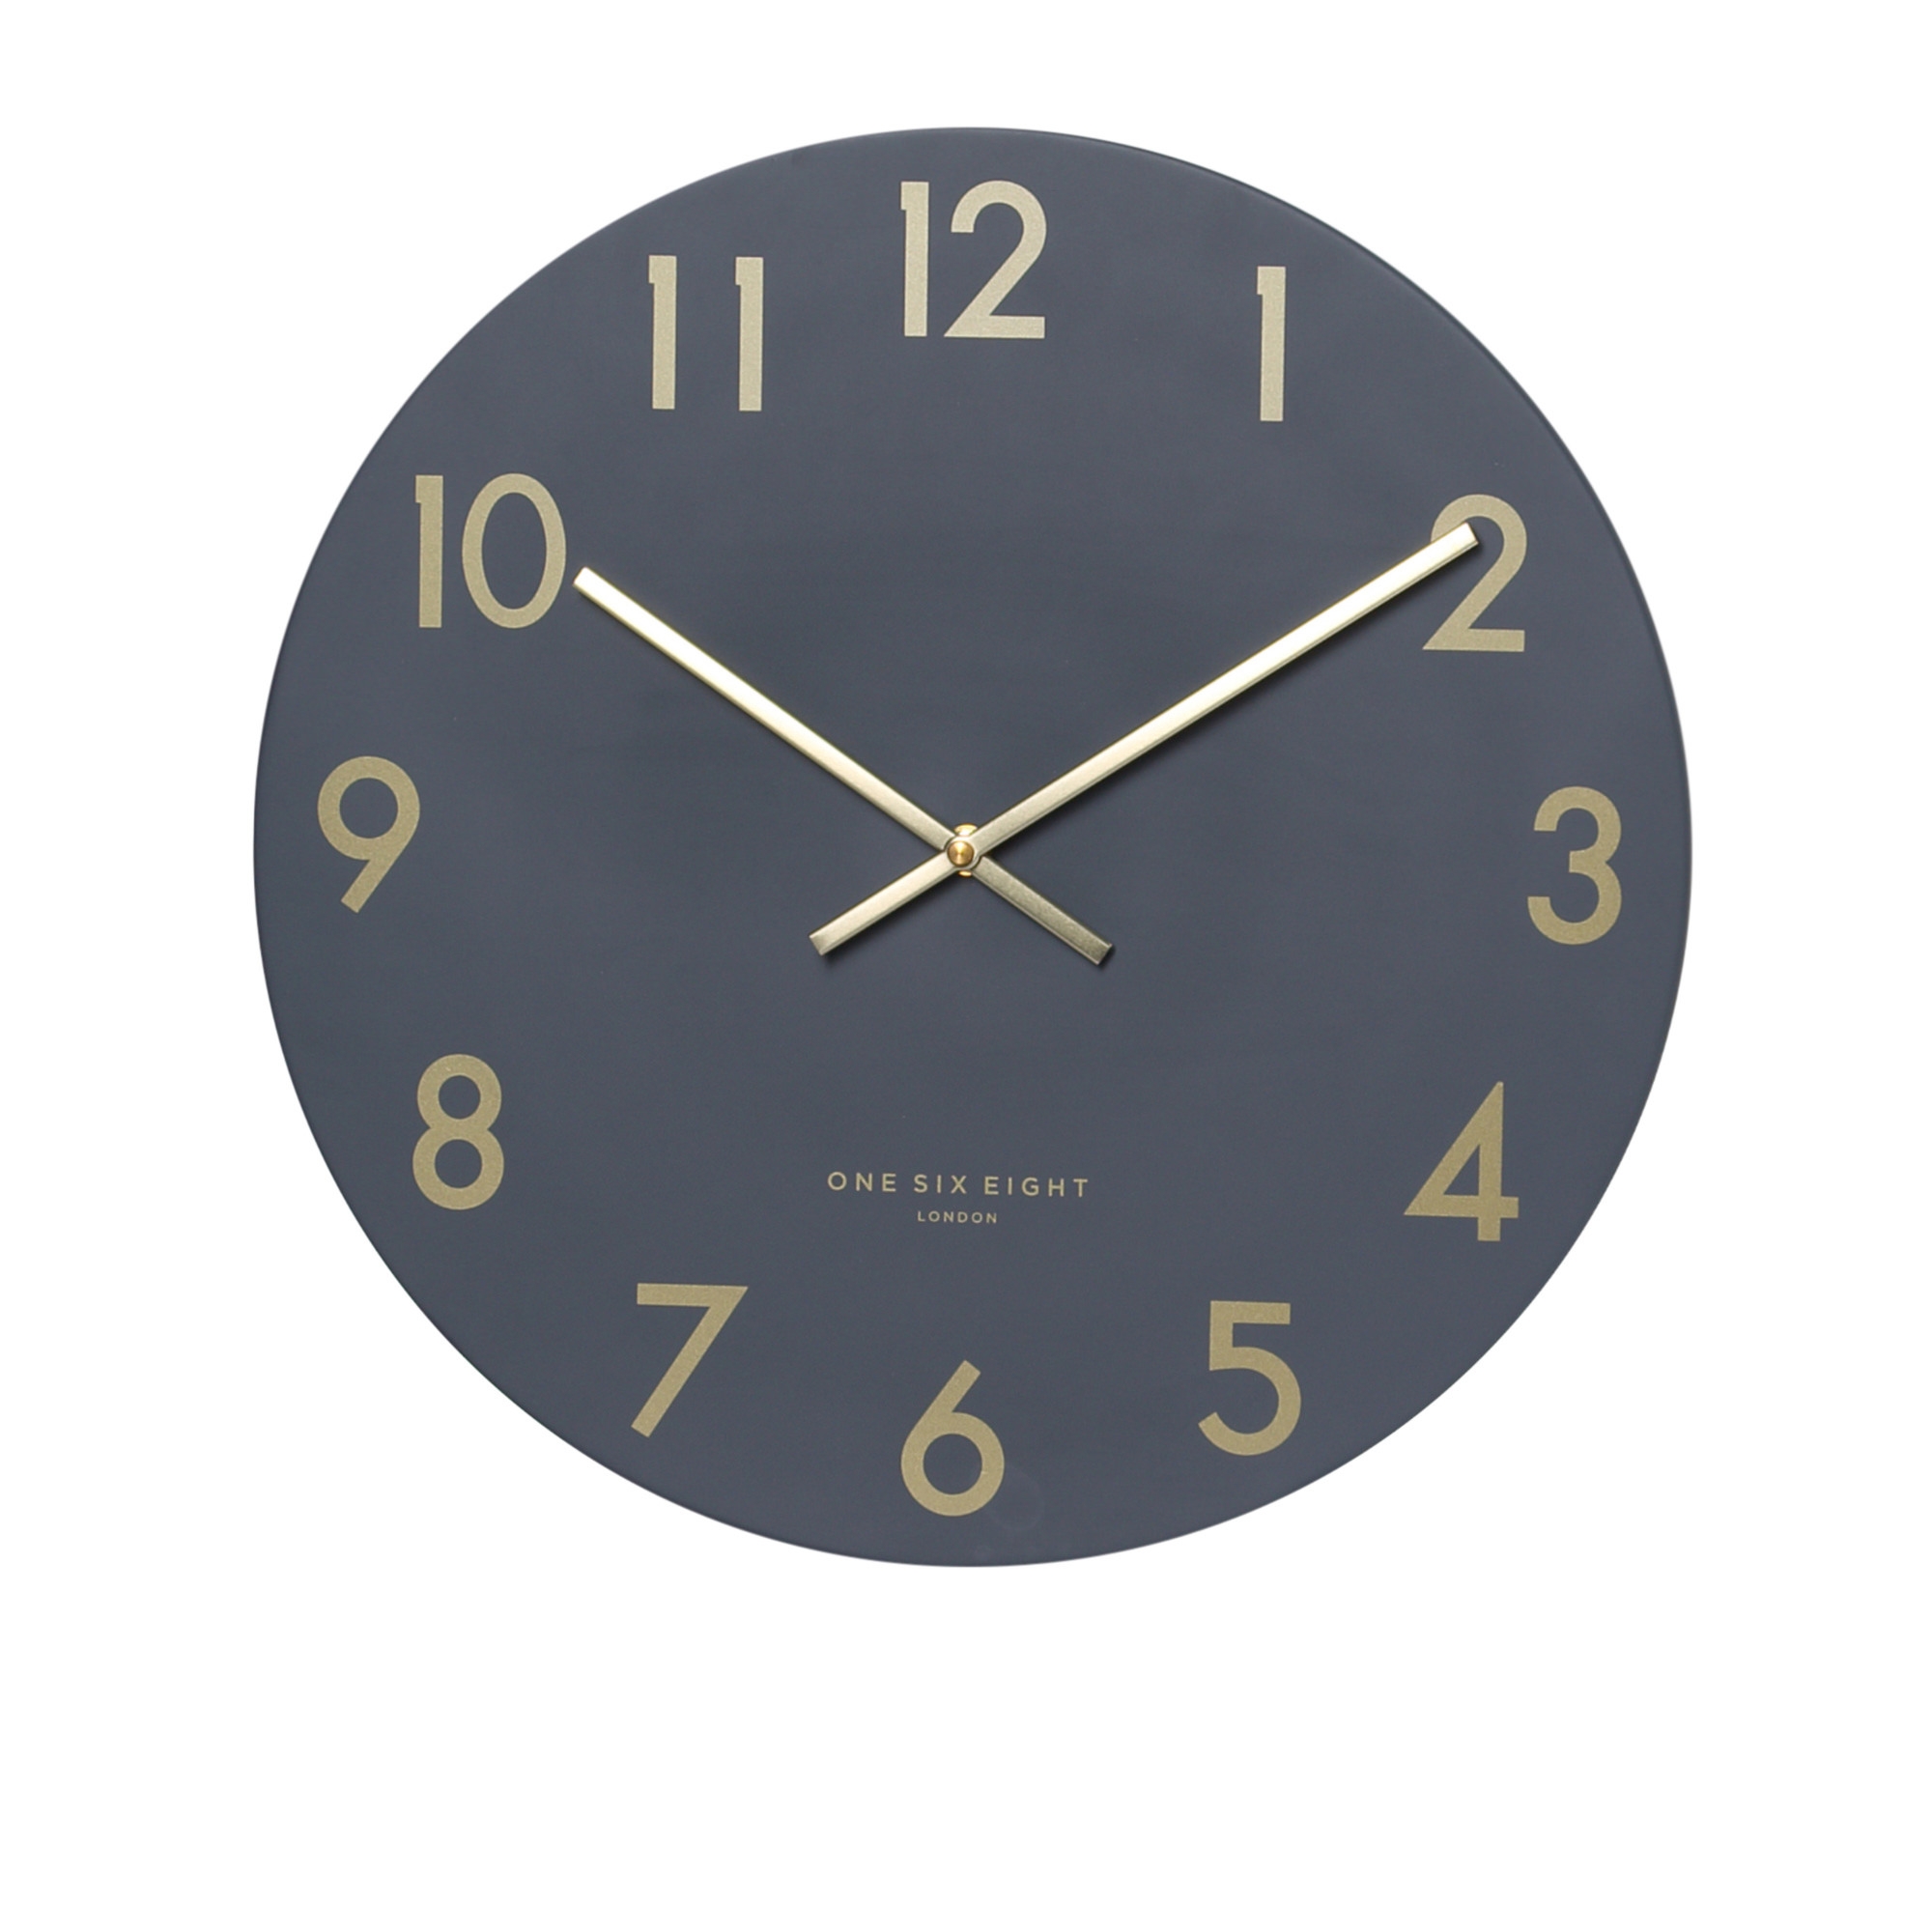 One Six Eight London Jones Silent Wall Clock 40cm Charcoal Grey Image 1